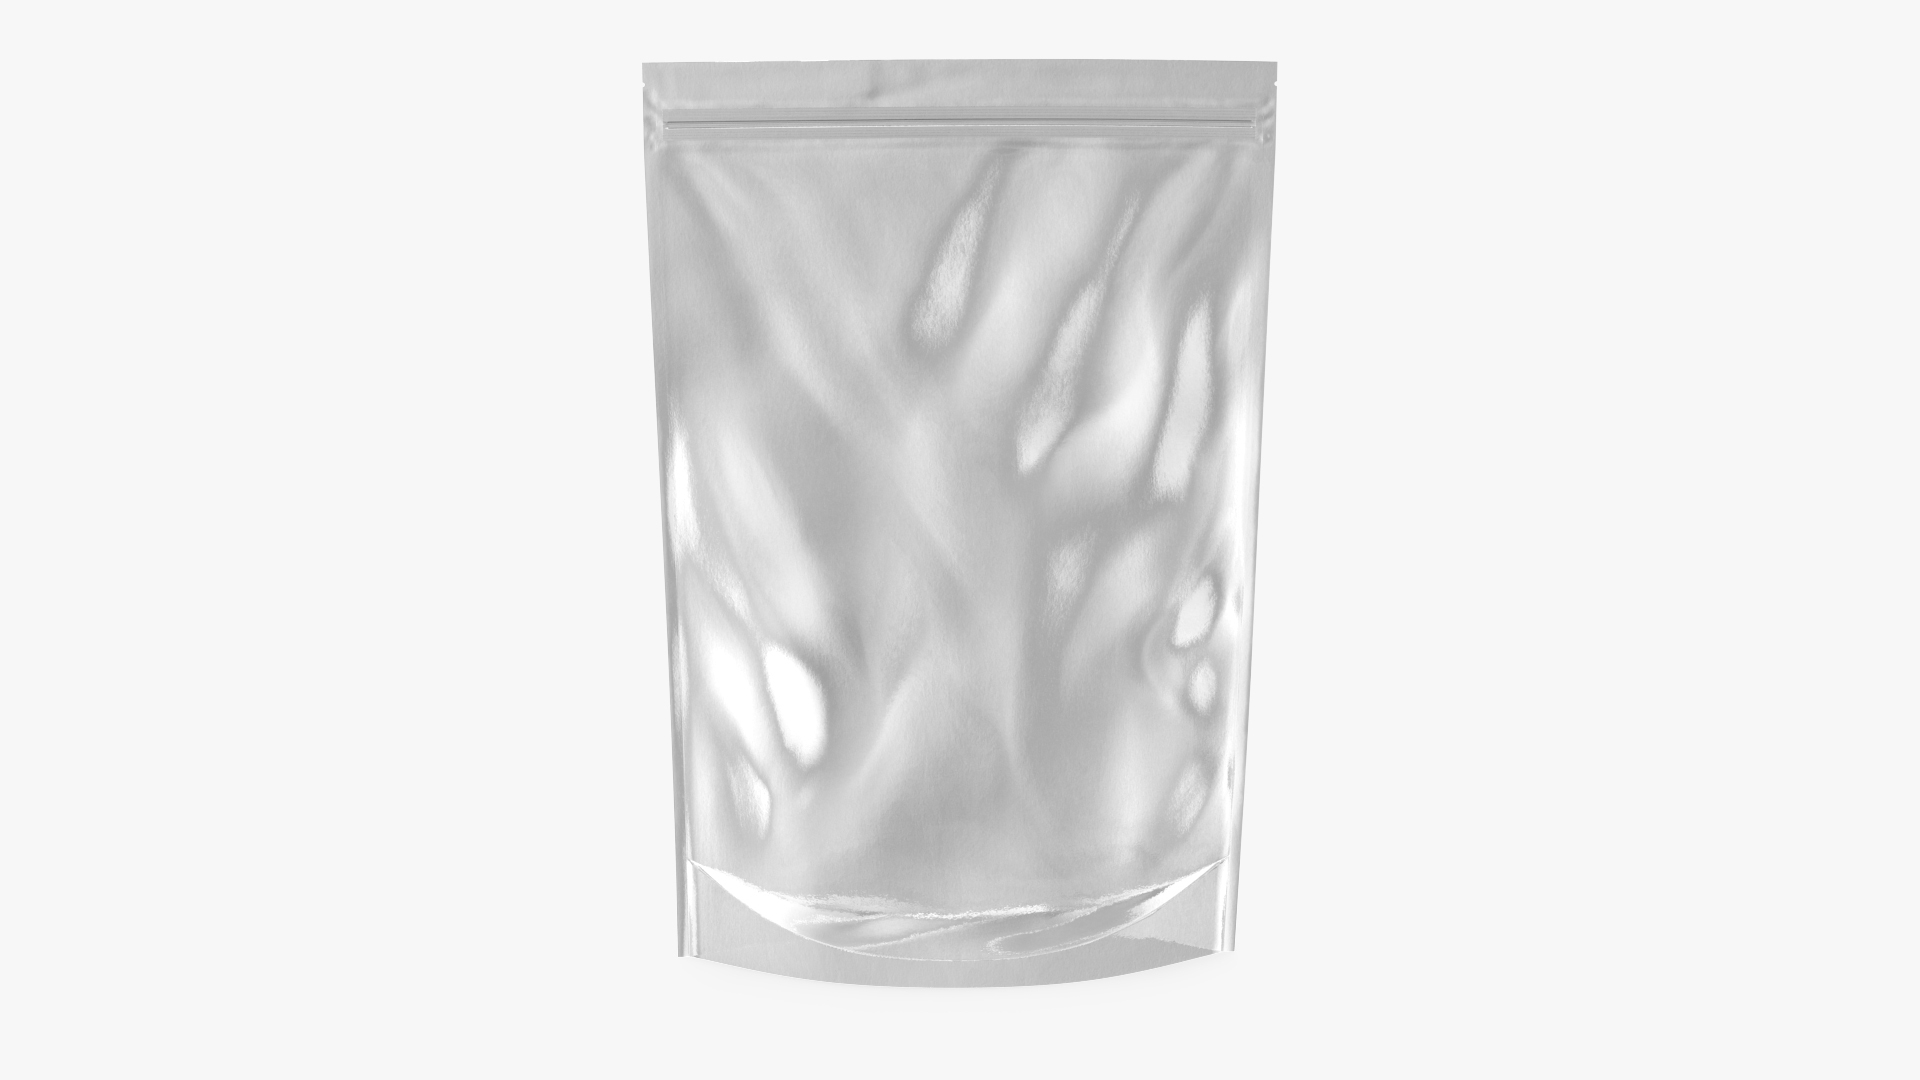 40,443 Transparent Plastic Bag Images, Stock Photos, 3D objects